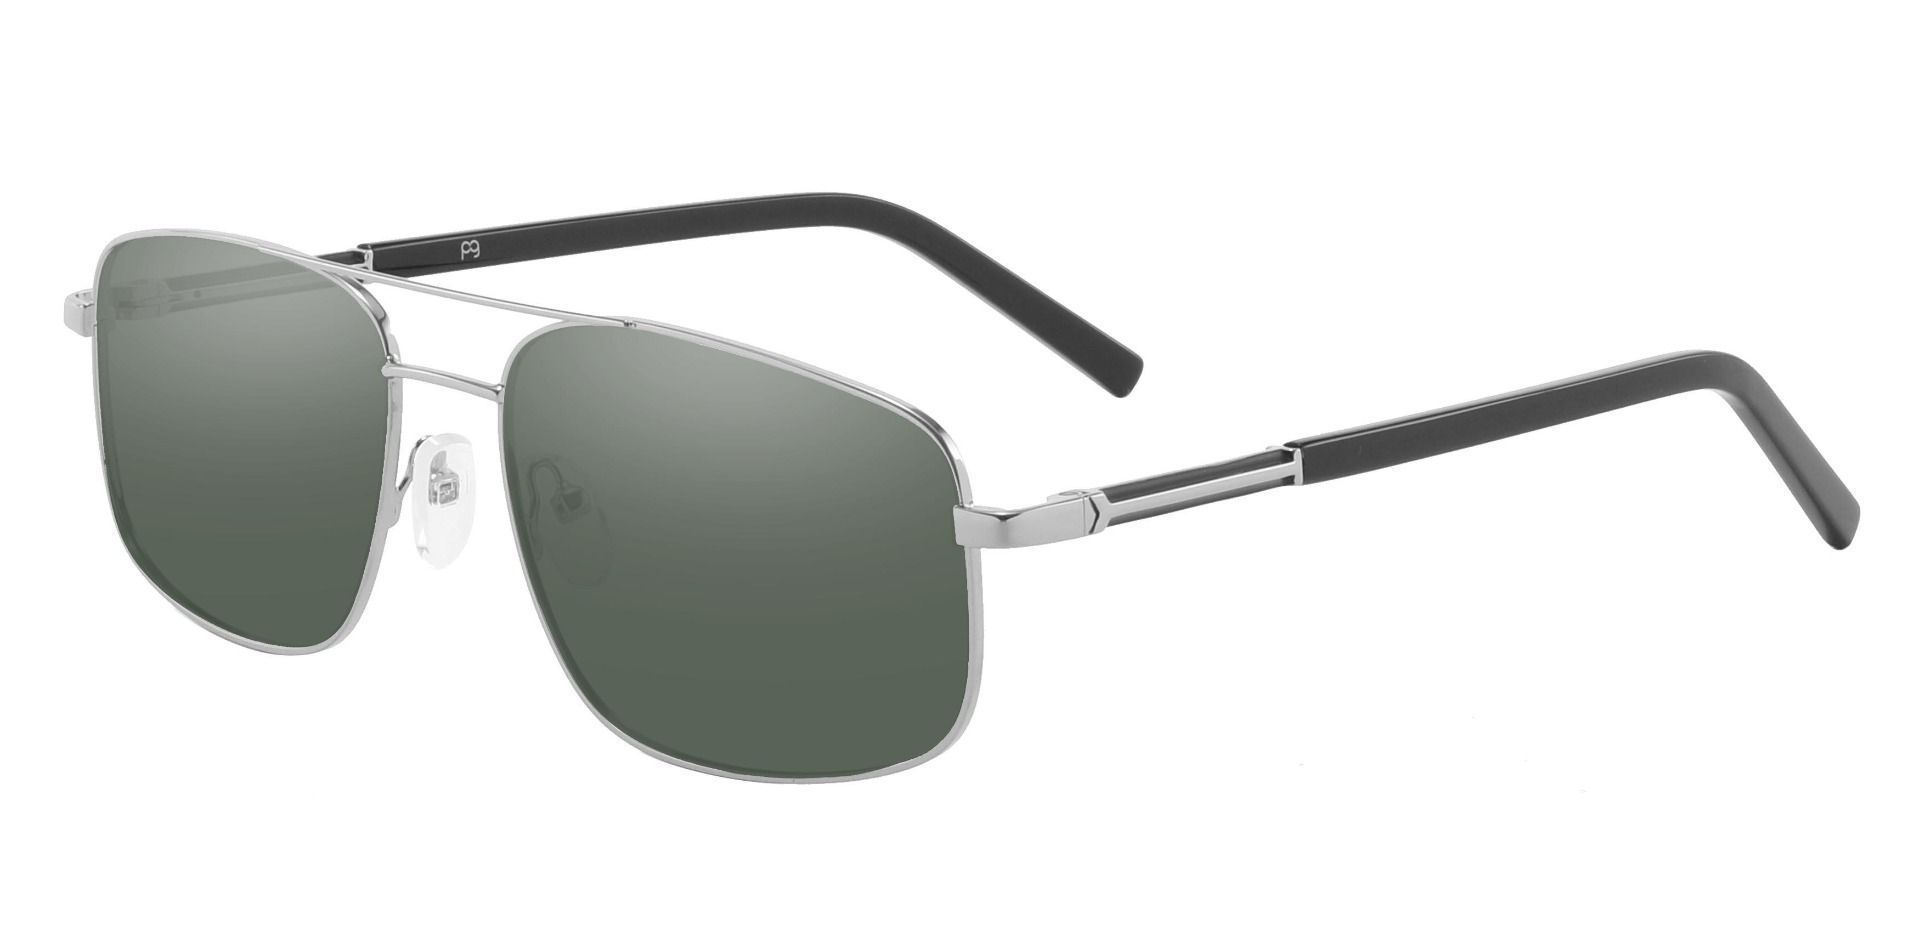 Davenport Aviator Prescription Sunglasses - Silver Frame With Green Lenses